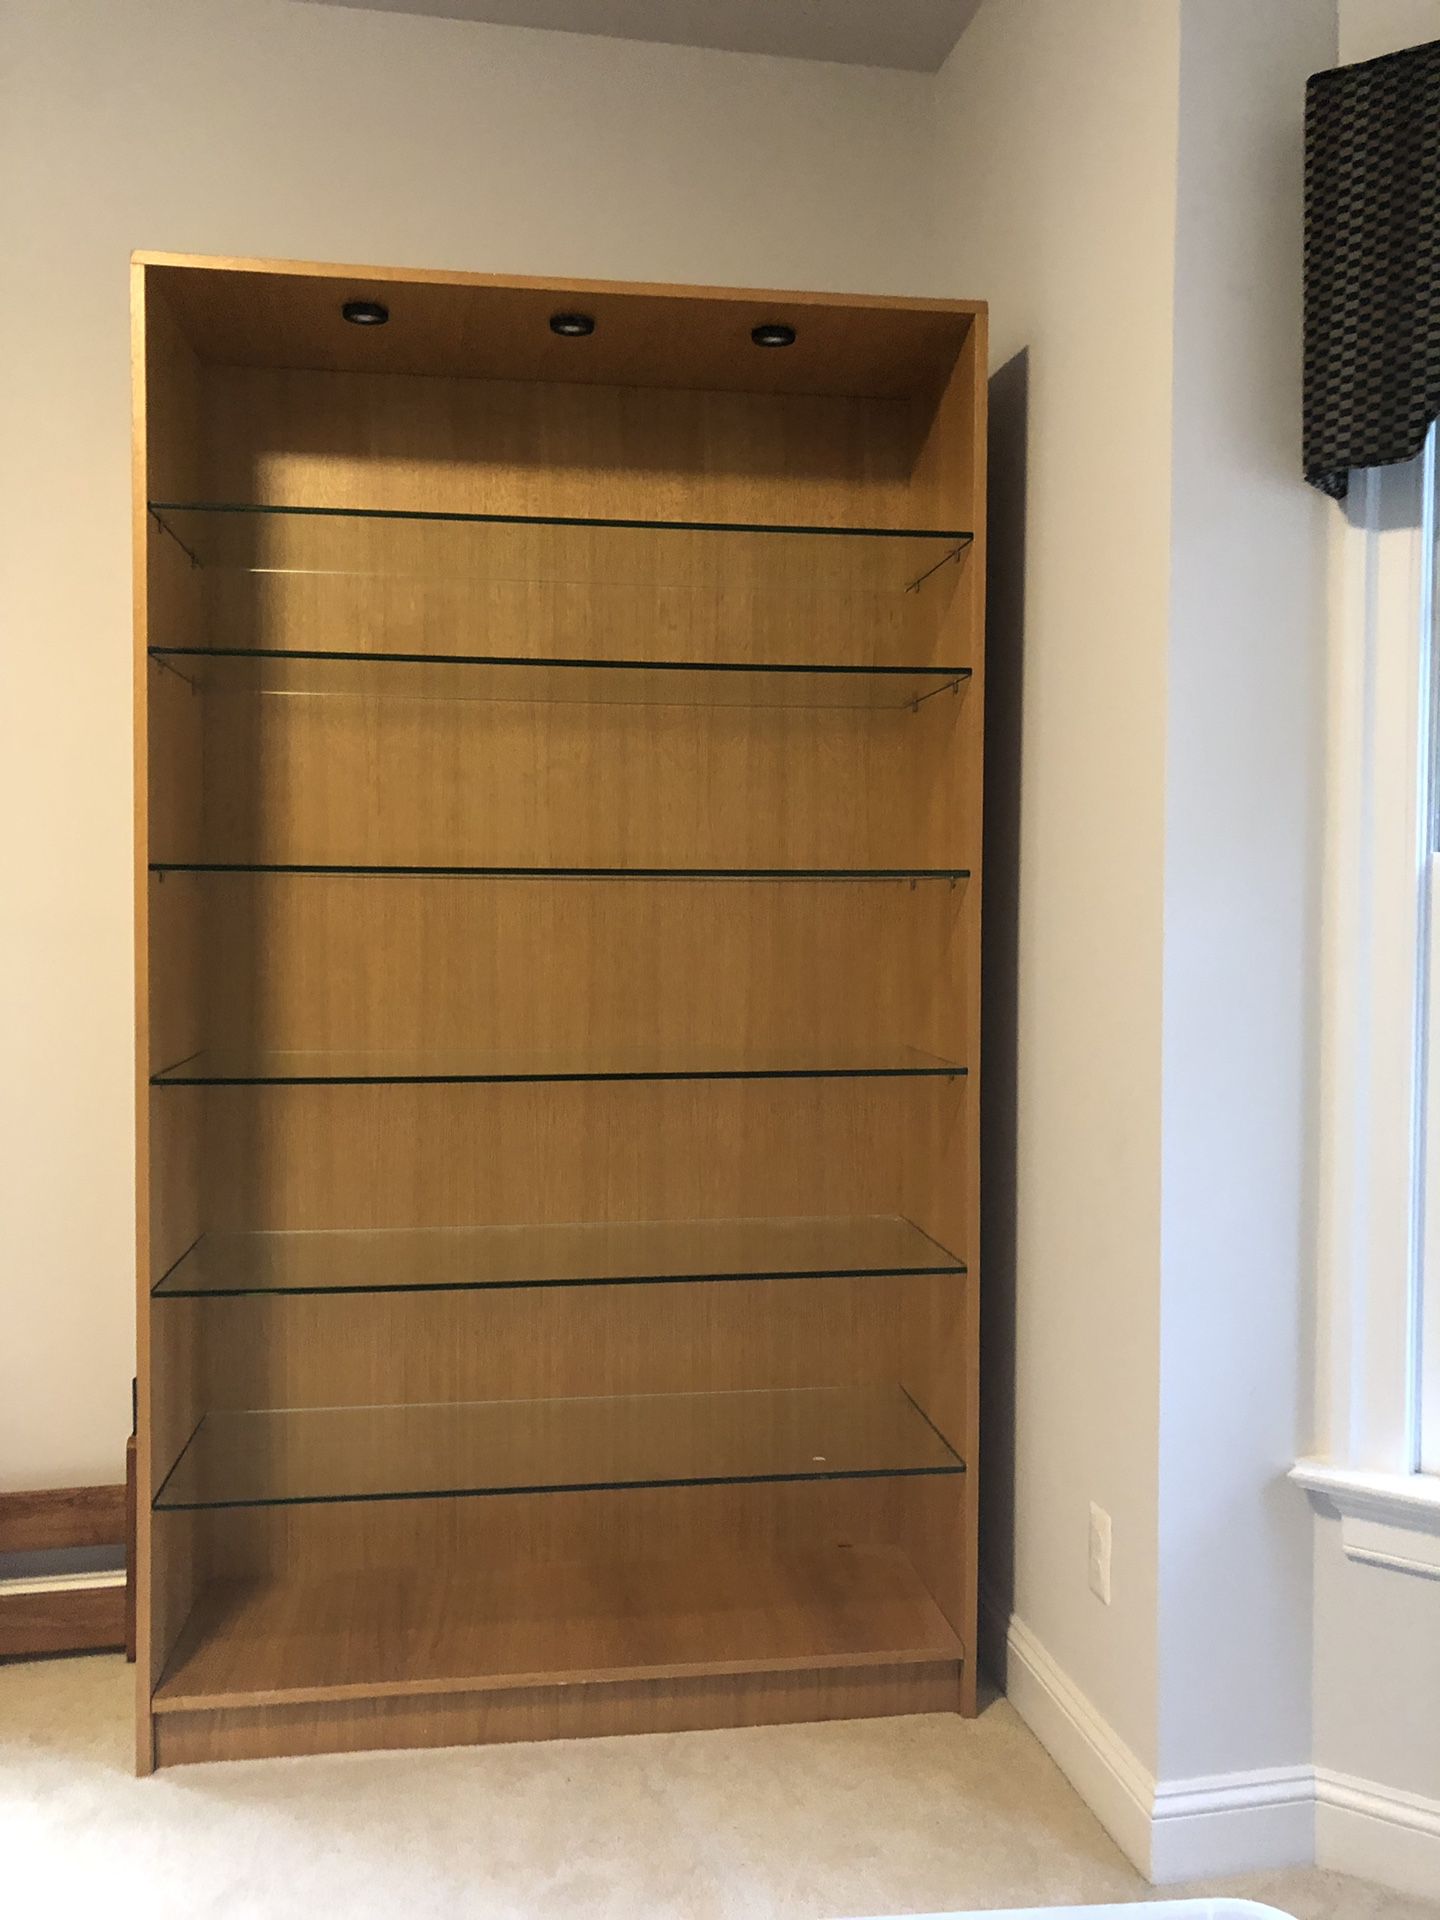 Dwells (UK) Bookcase / Display Cabinet